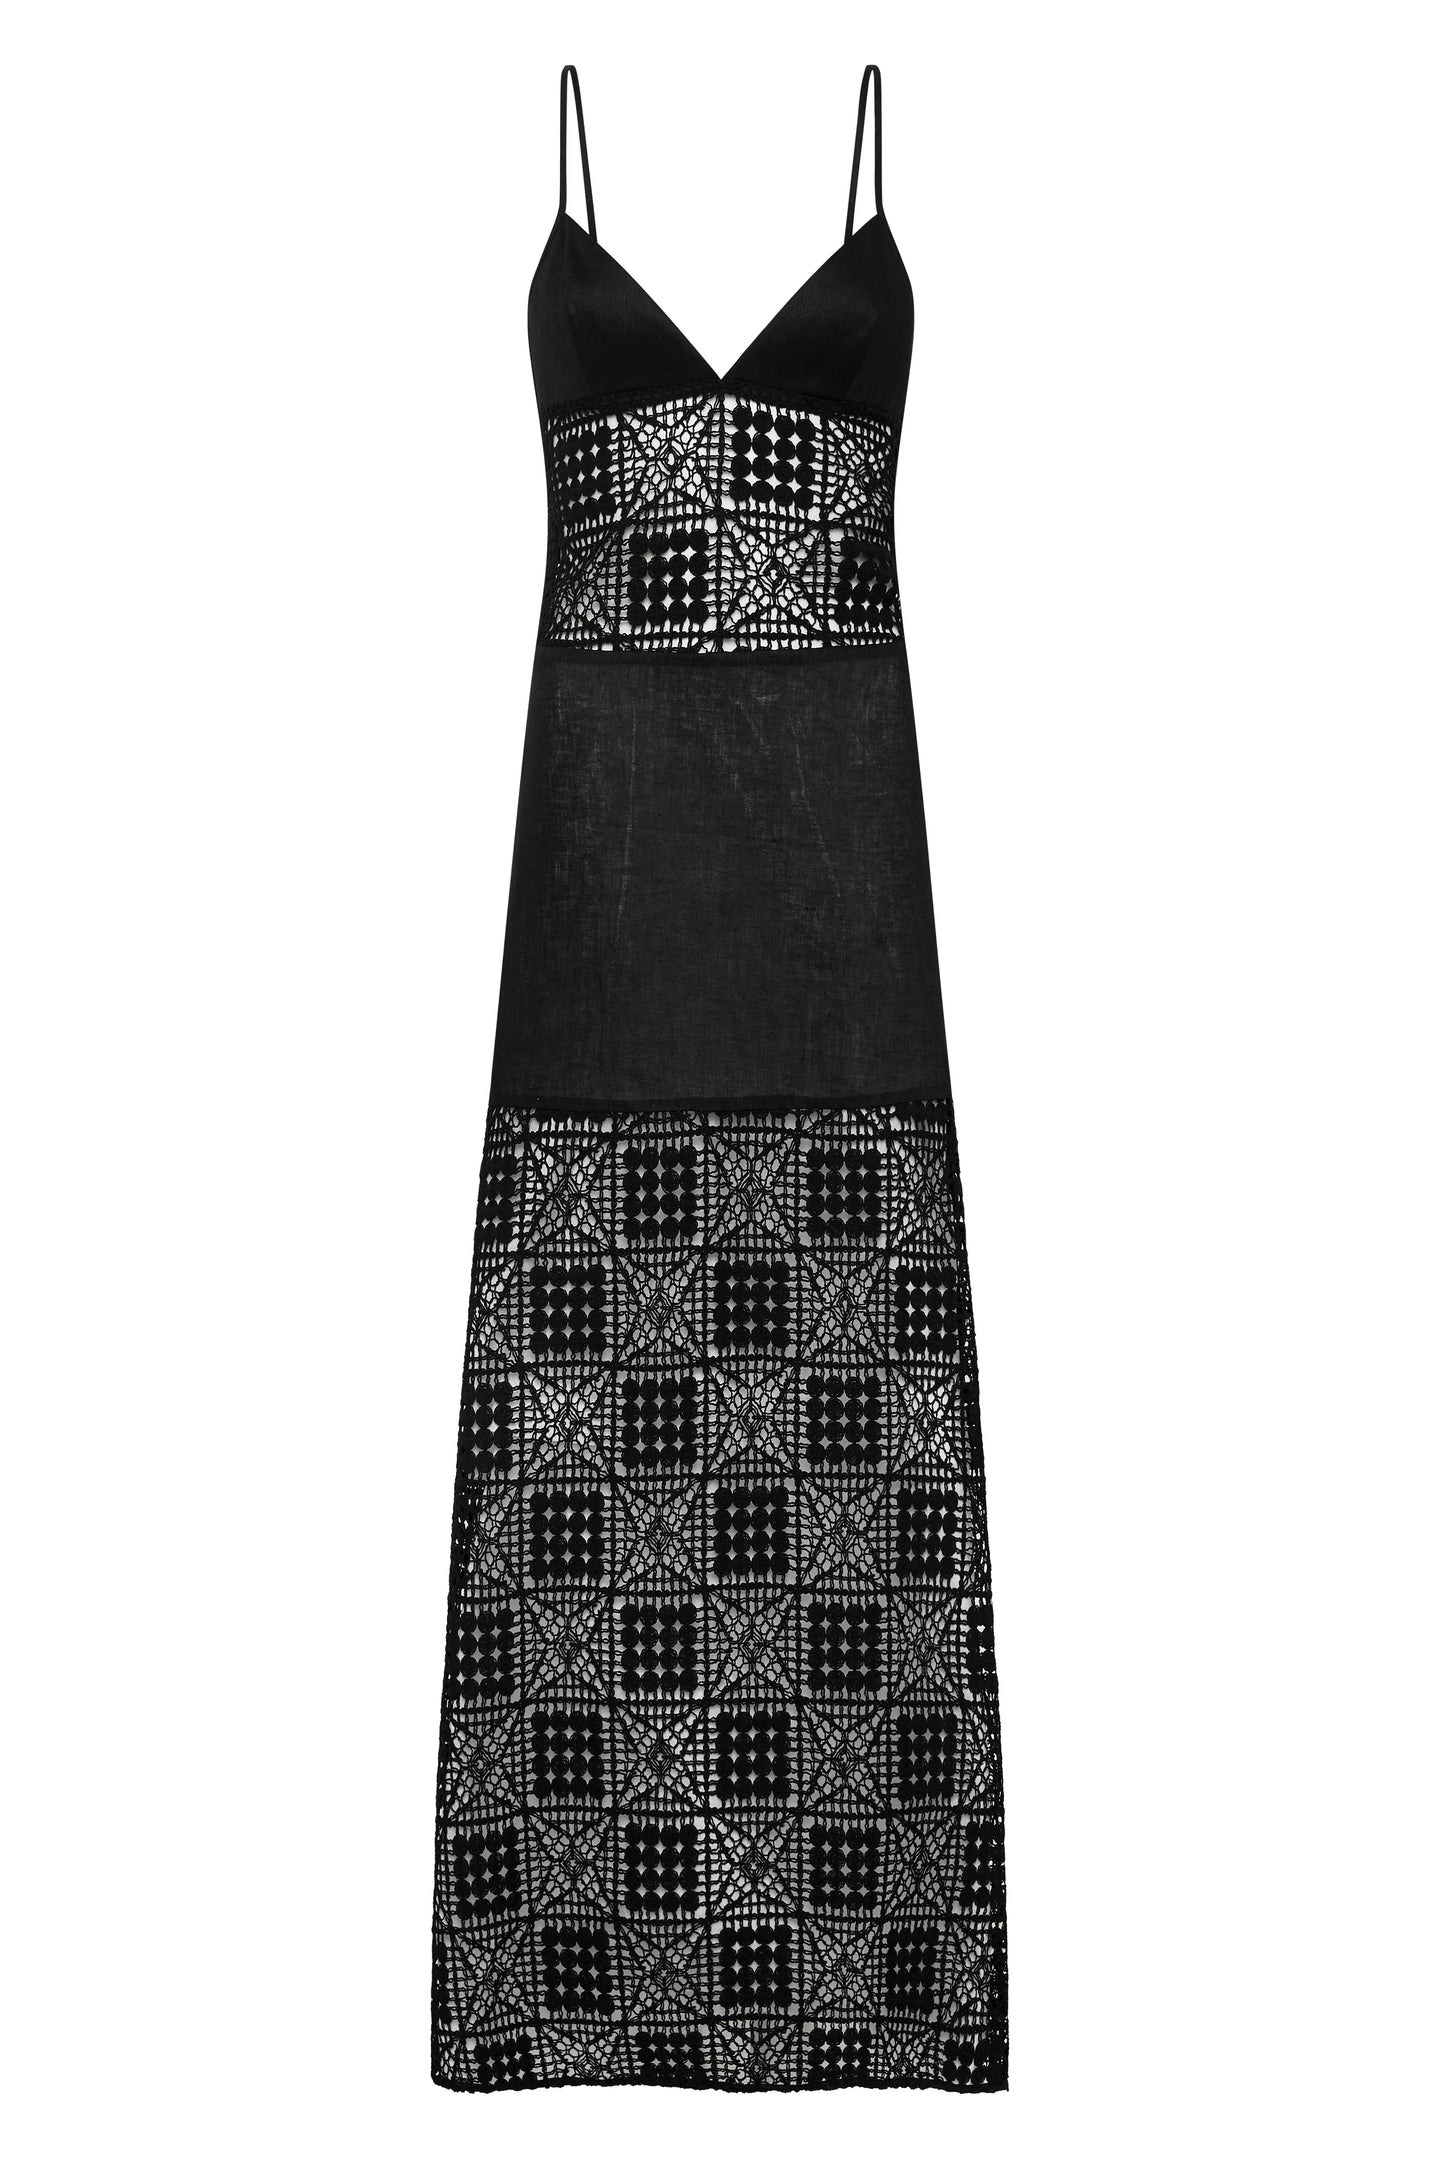 SIR the label Rayure Tri Maxi Dress Black Crochet